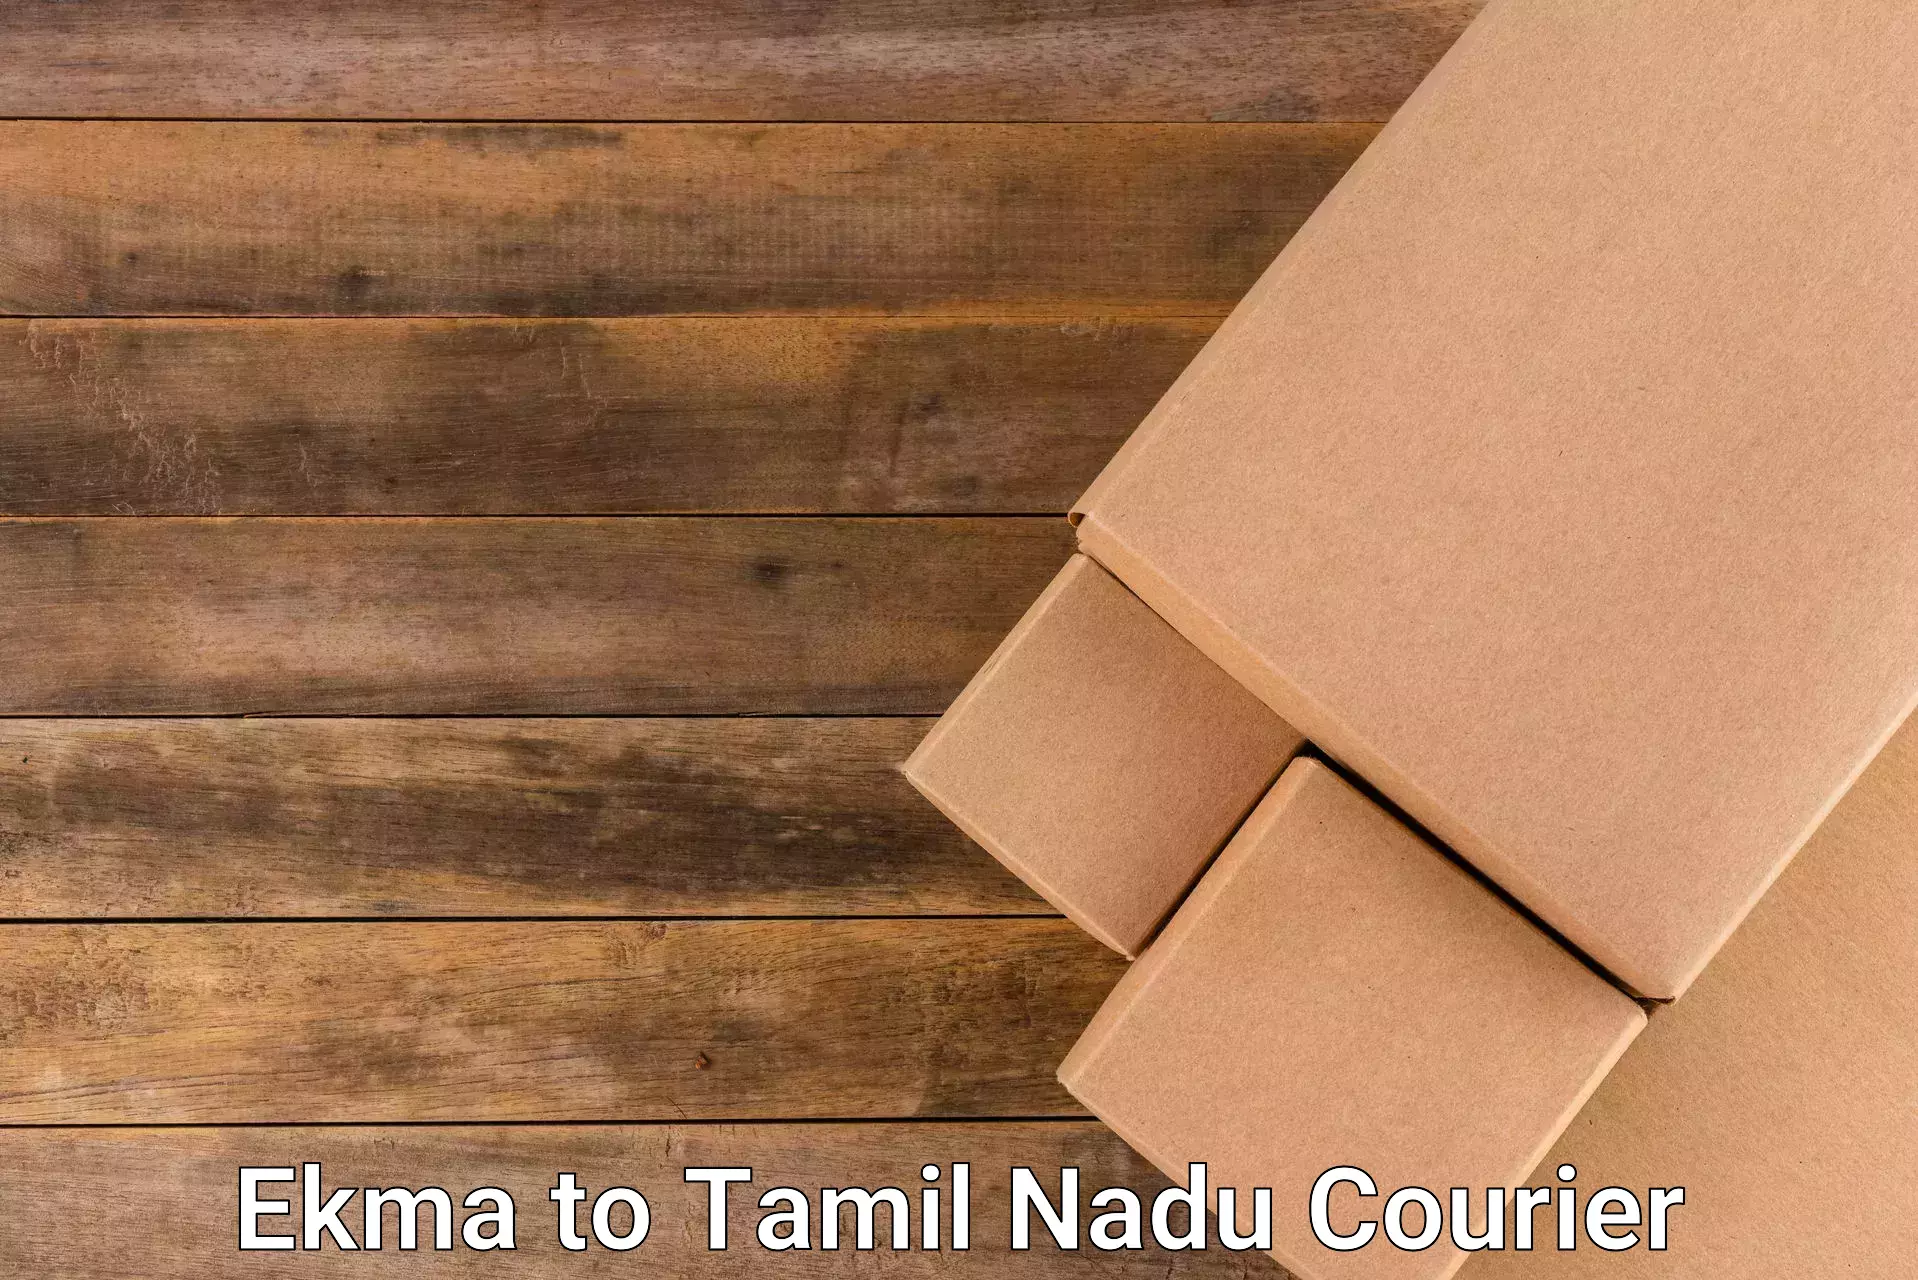 Full-service courier options Ekma to Madurai